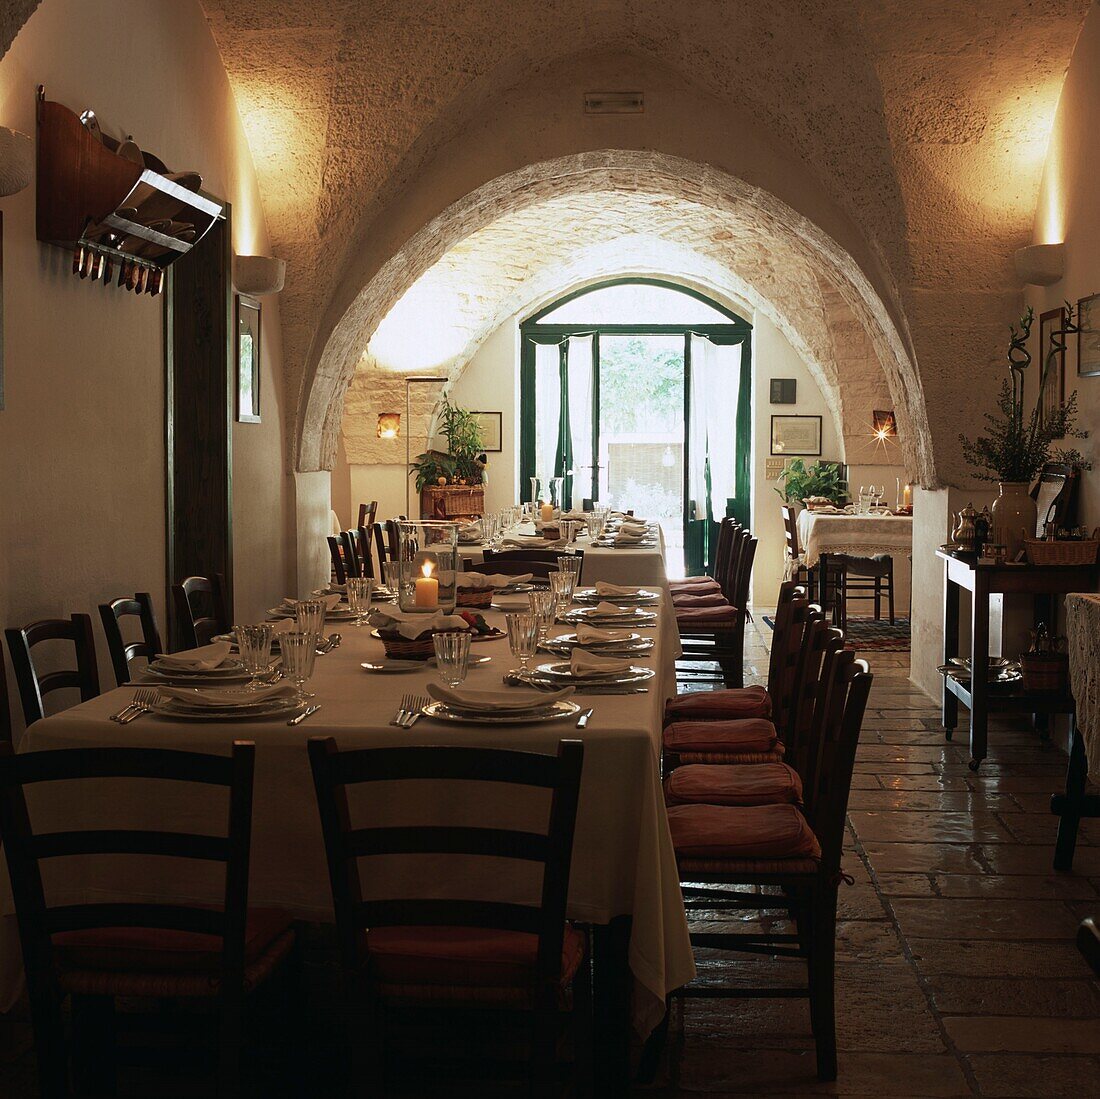 Interior of luxury restaurant